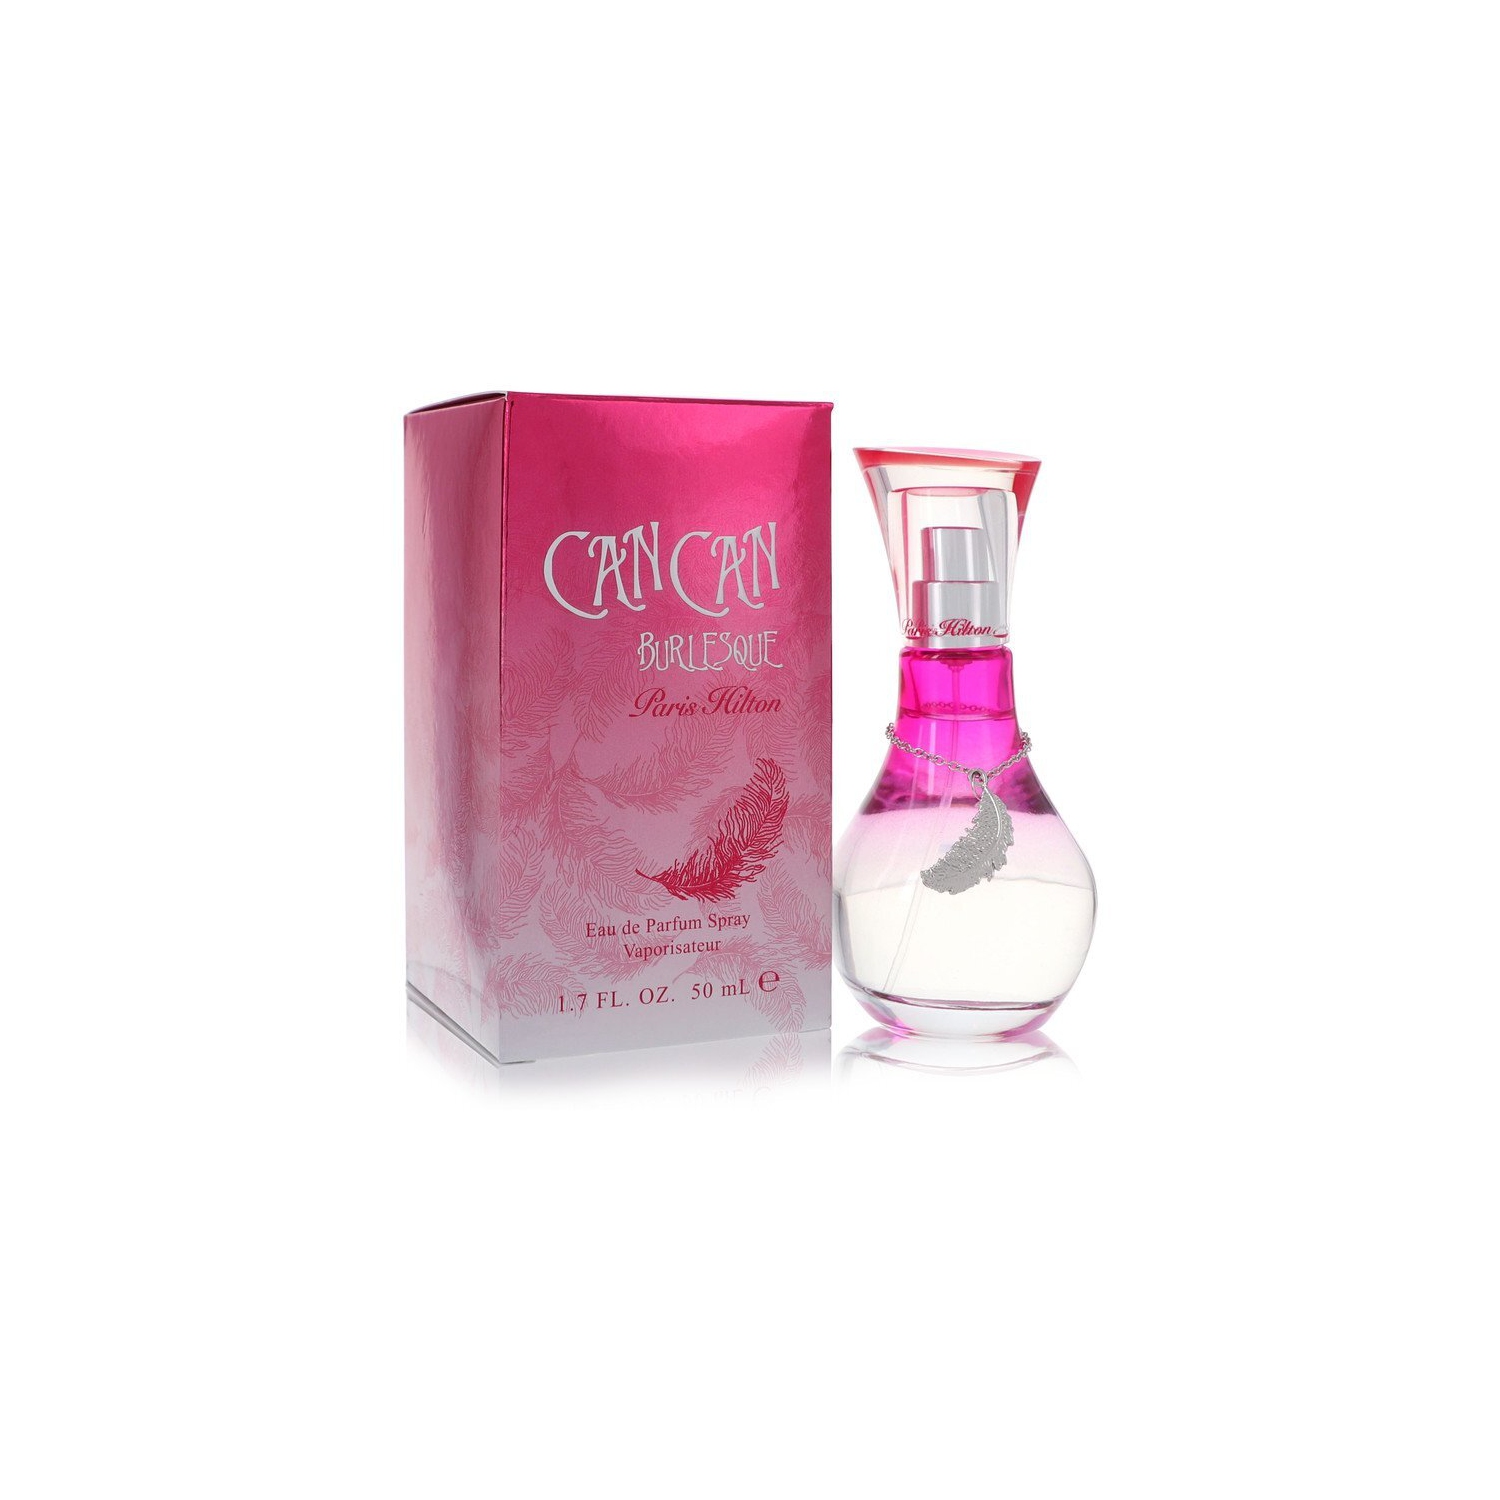 Can Can Burlesque by Paris Hilton Eau De Parfum Spray 1.7 oz (Women)